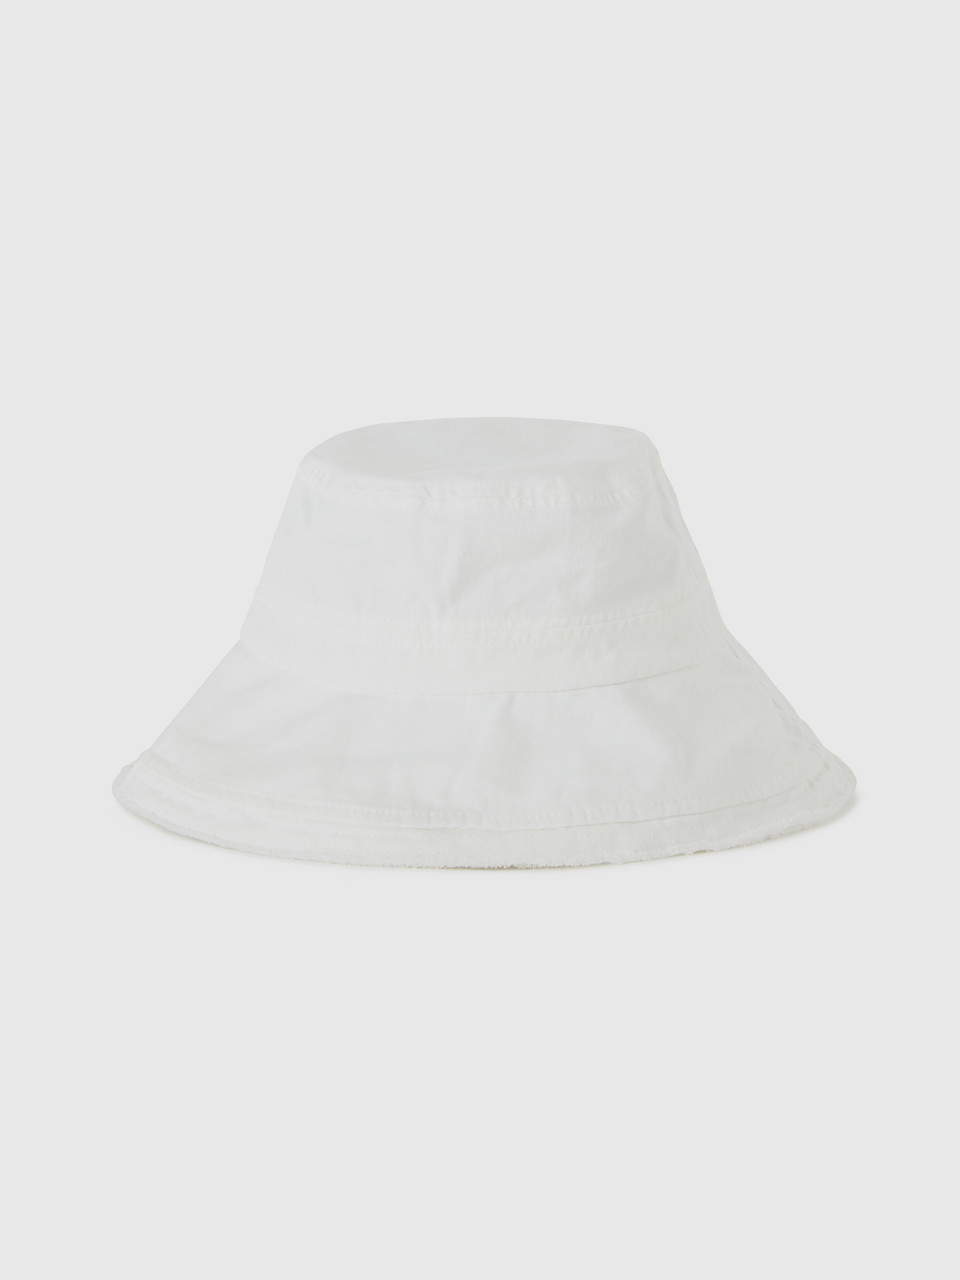 Benetton, White Bucket-style Hat, Creamy White, Women